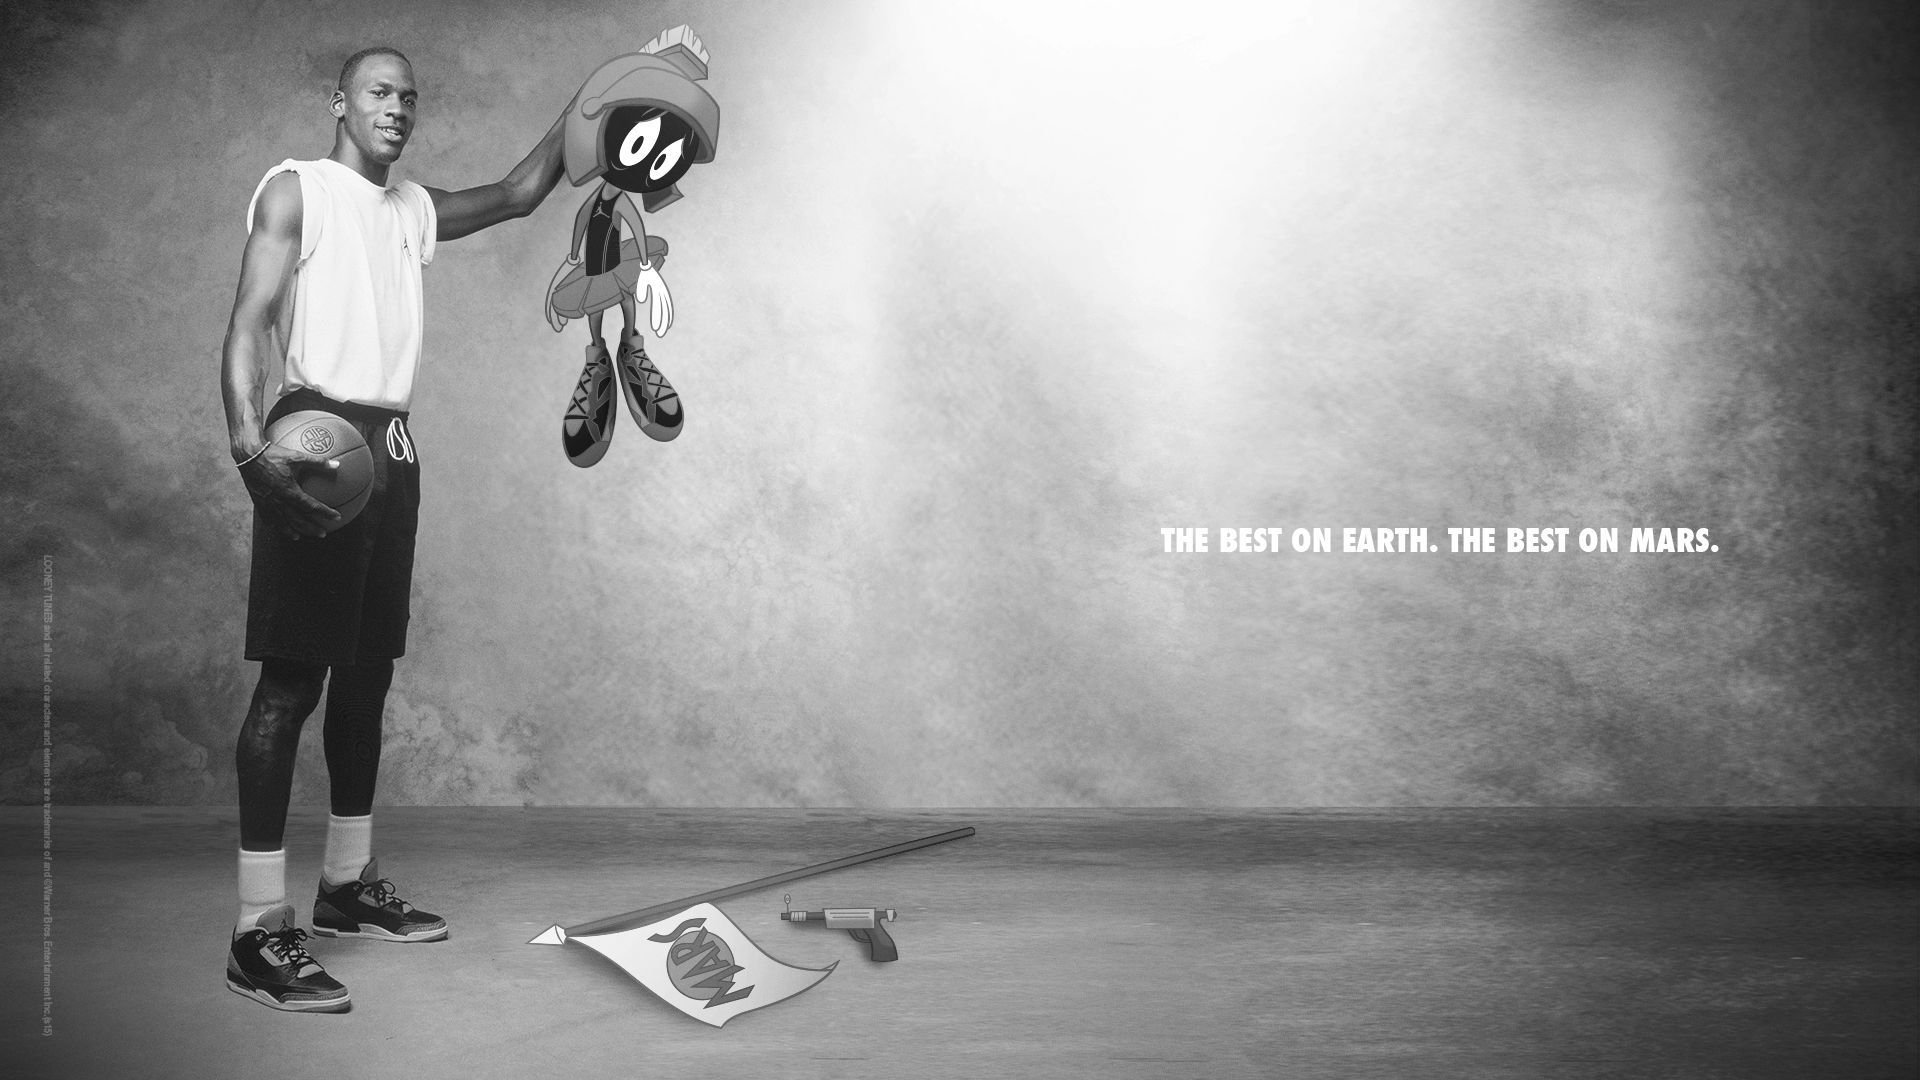 Marvin-The-Martian-Wallpaper. Nike.com